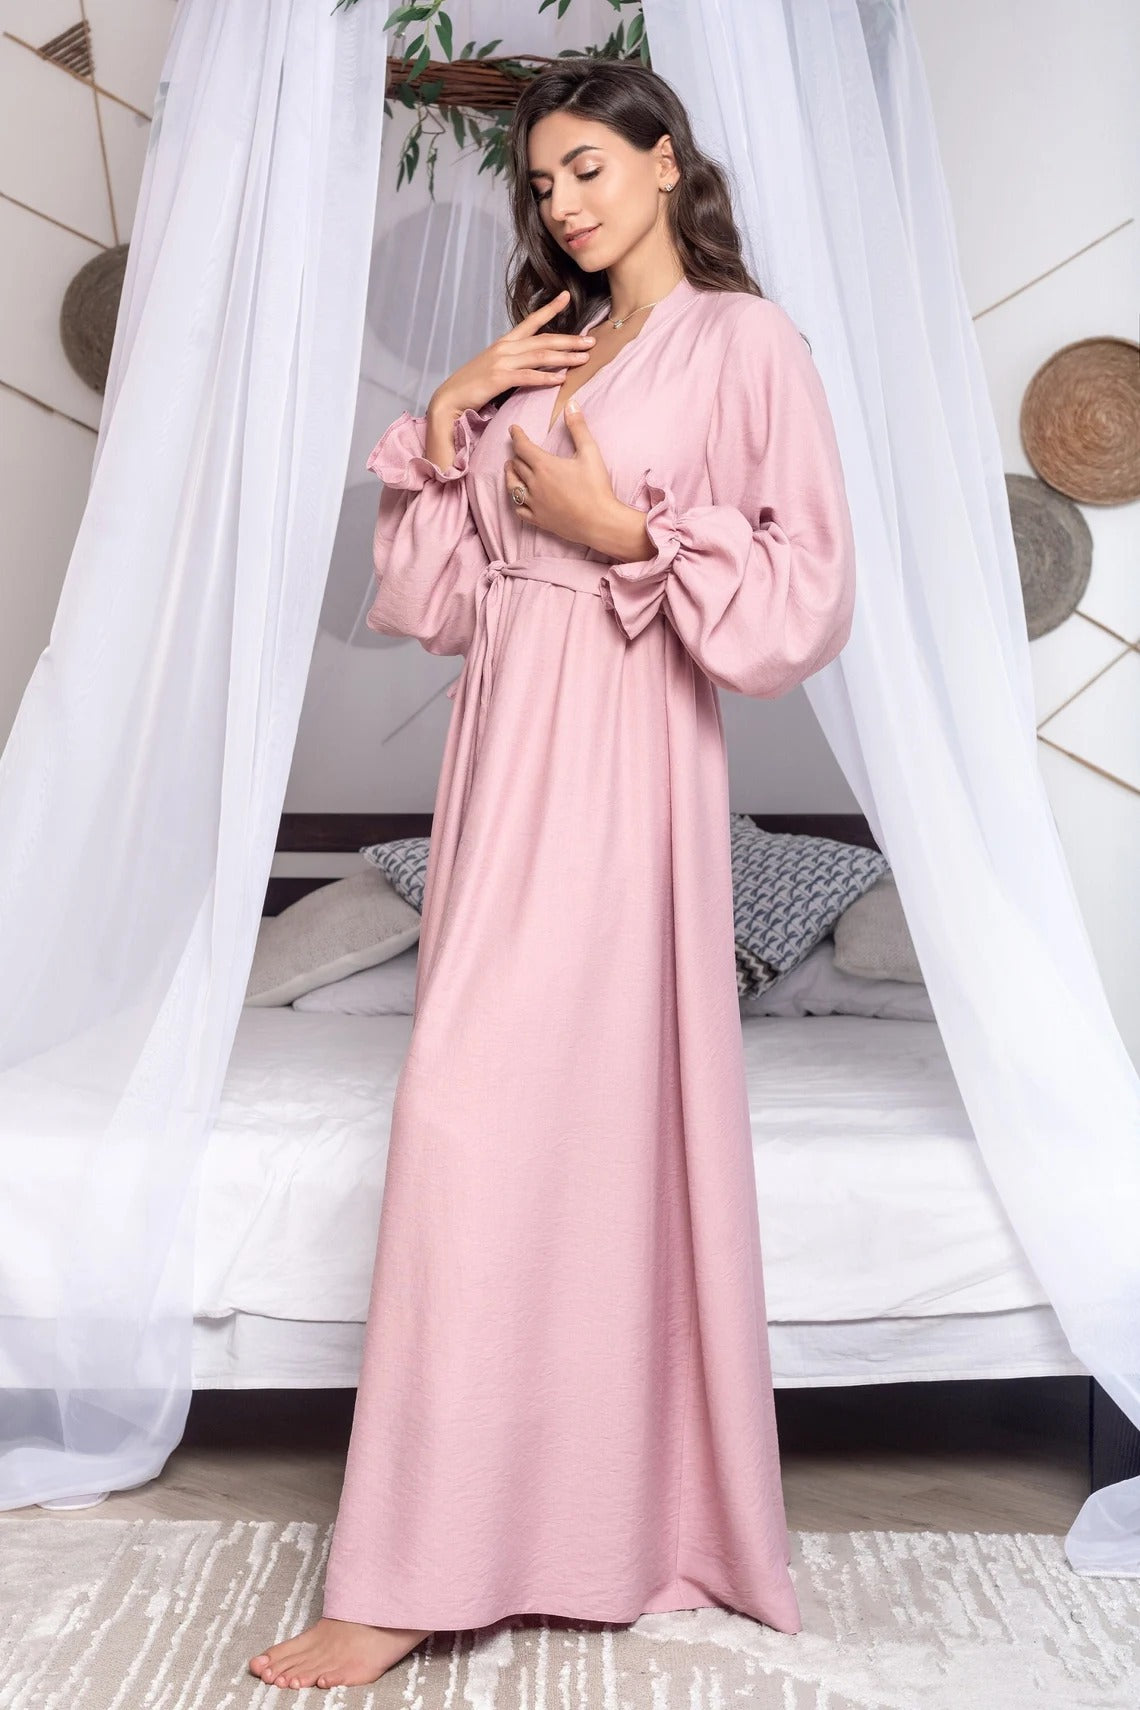 Elegance in Pink: Handcrafted Loungewear